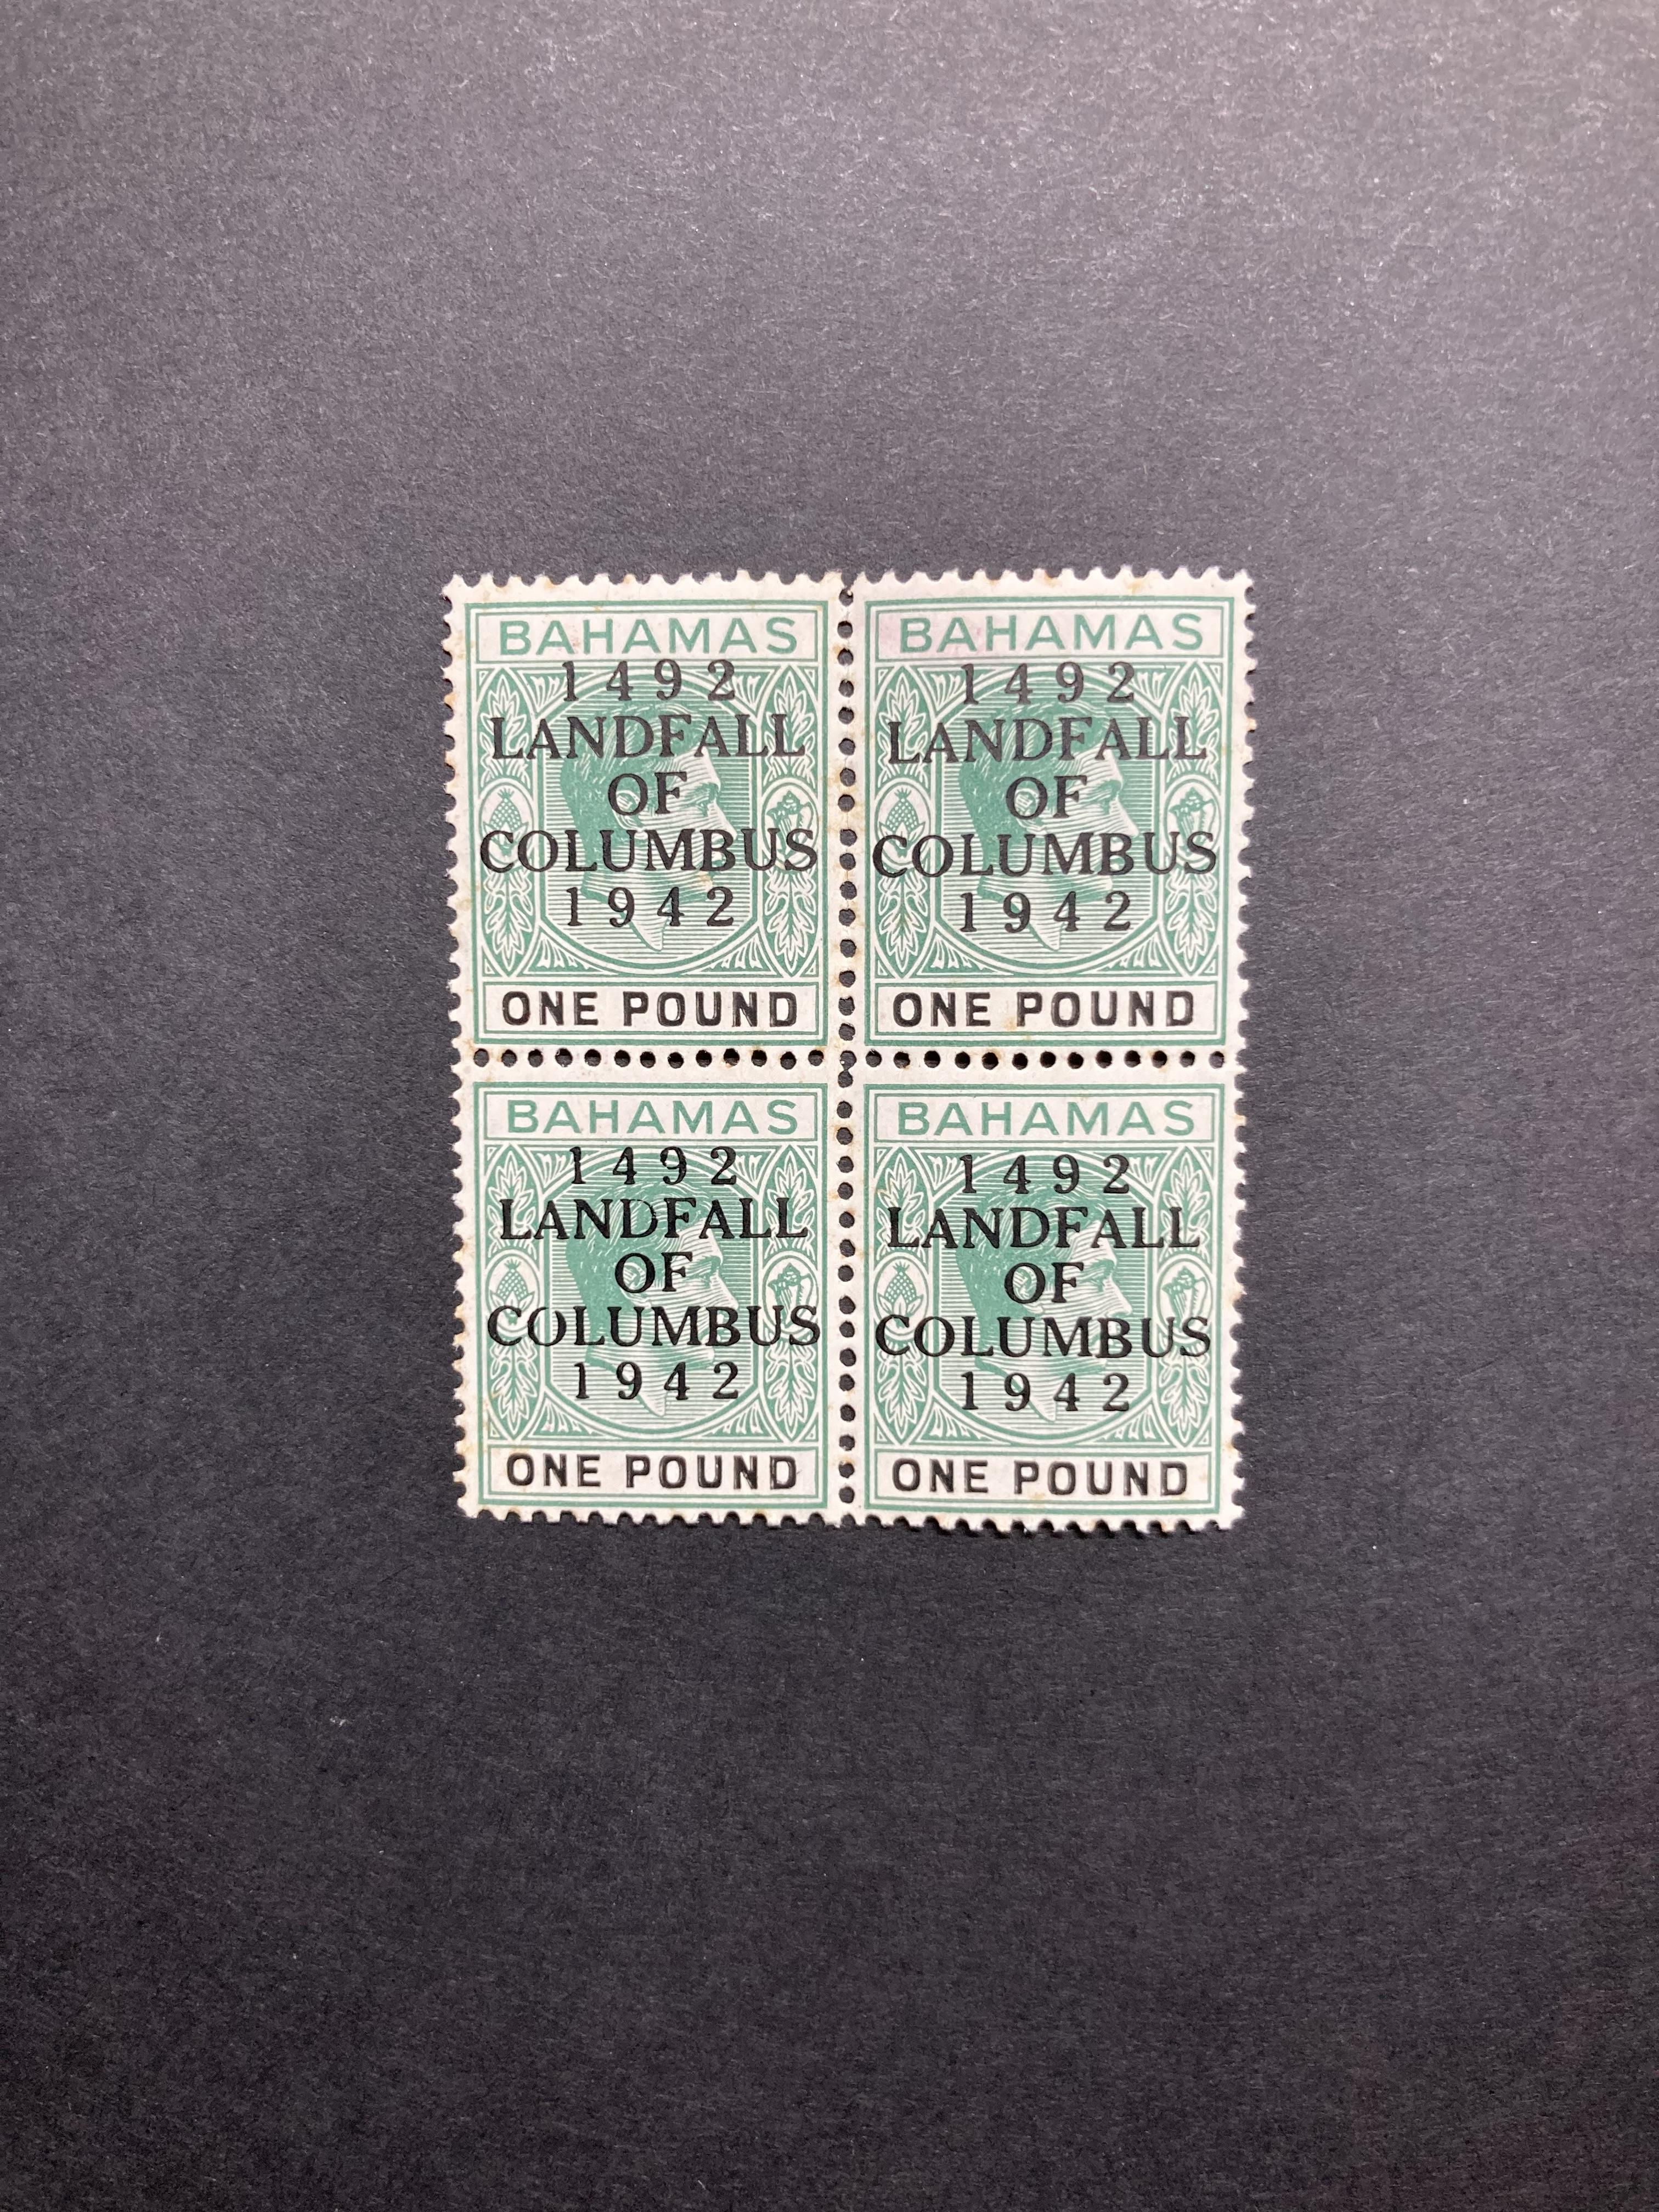 Bahamas stamps: KGVI £1 Landfall of Columbus mint block of 4, thick paper, SG 175, cat £320